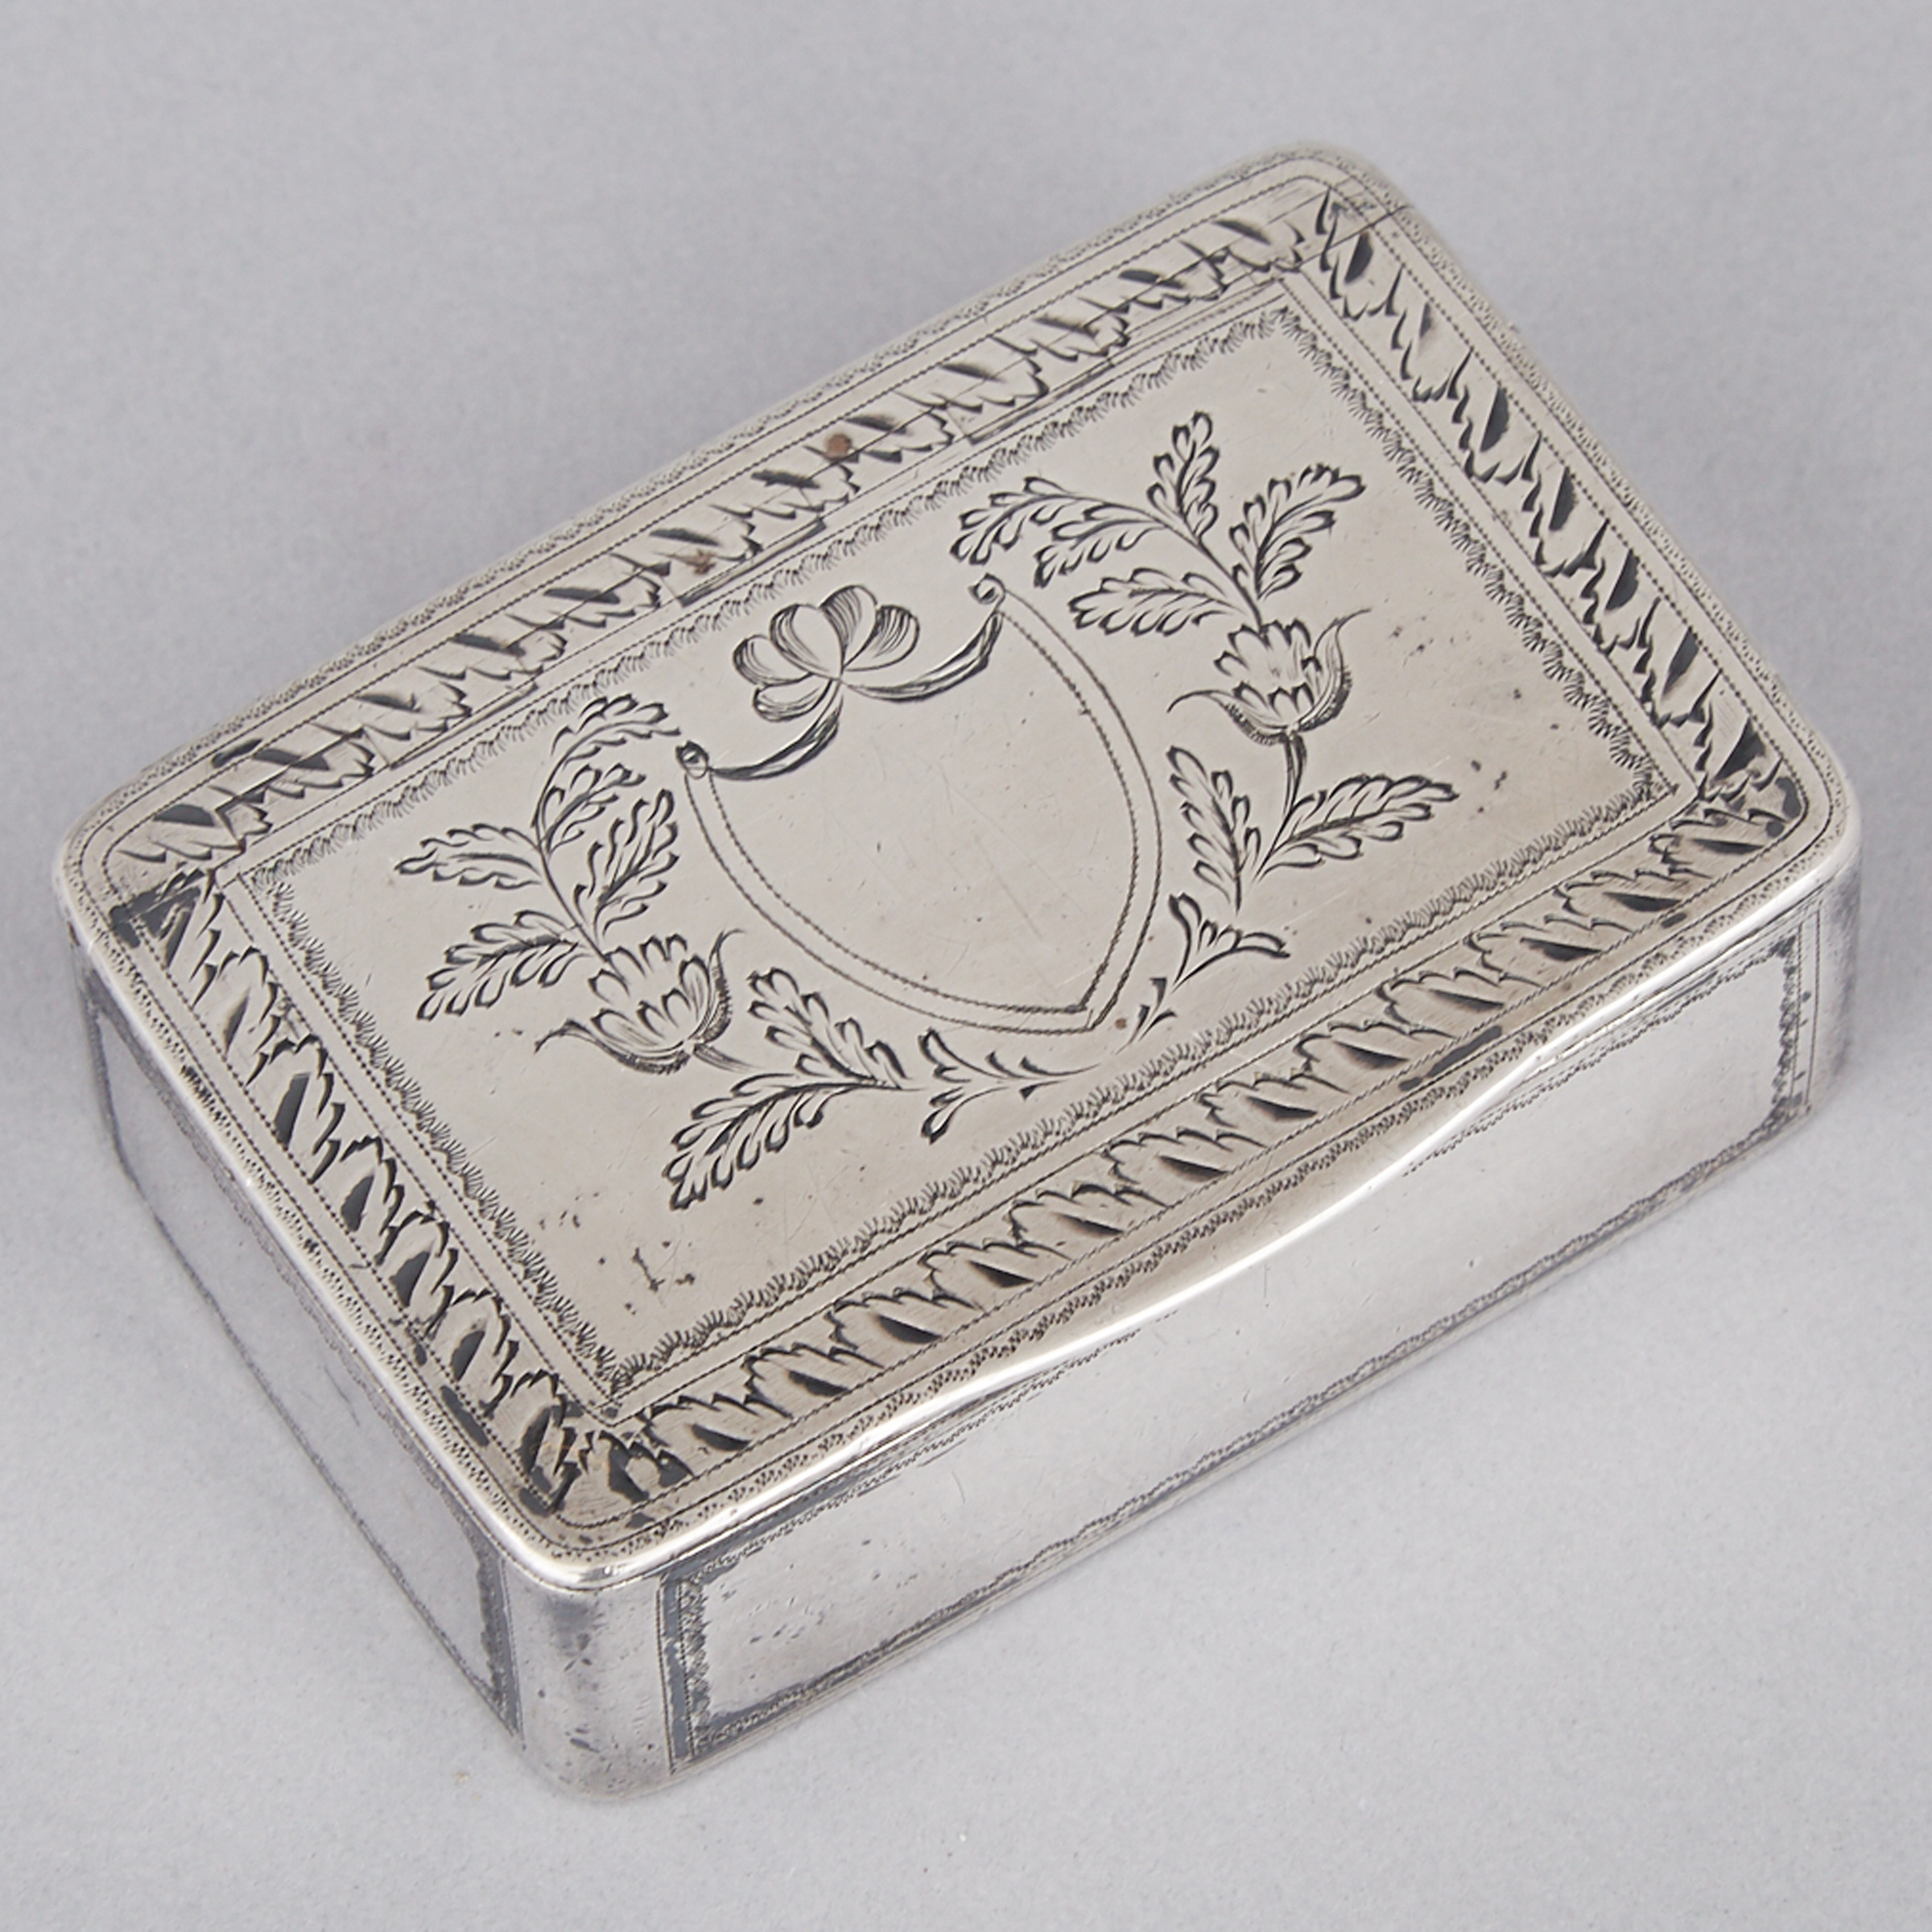 Canadian Silver Engraved Rectangular Snuff Box, Laurent Amiot, Quebec City, Que., c.1800